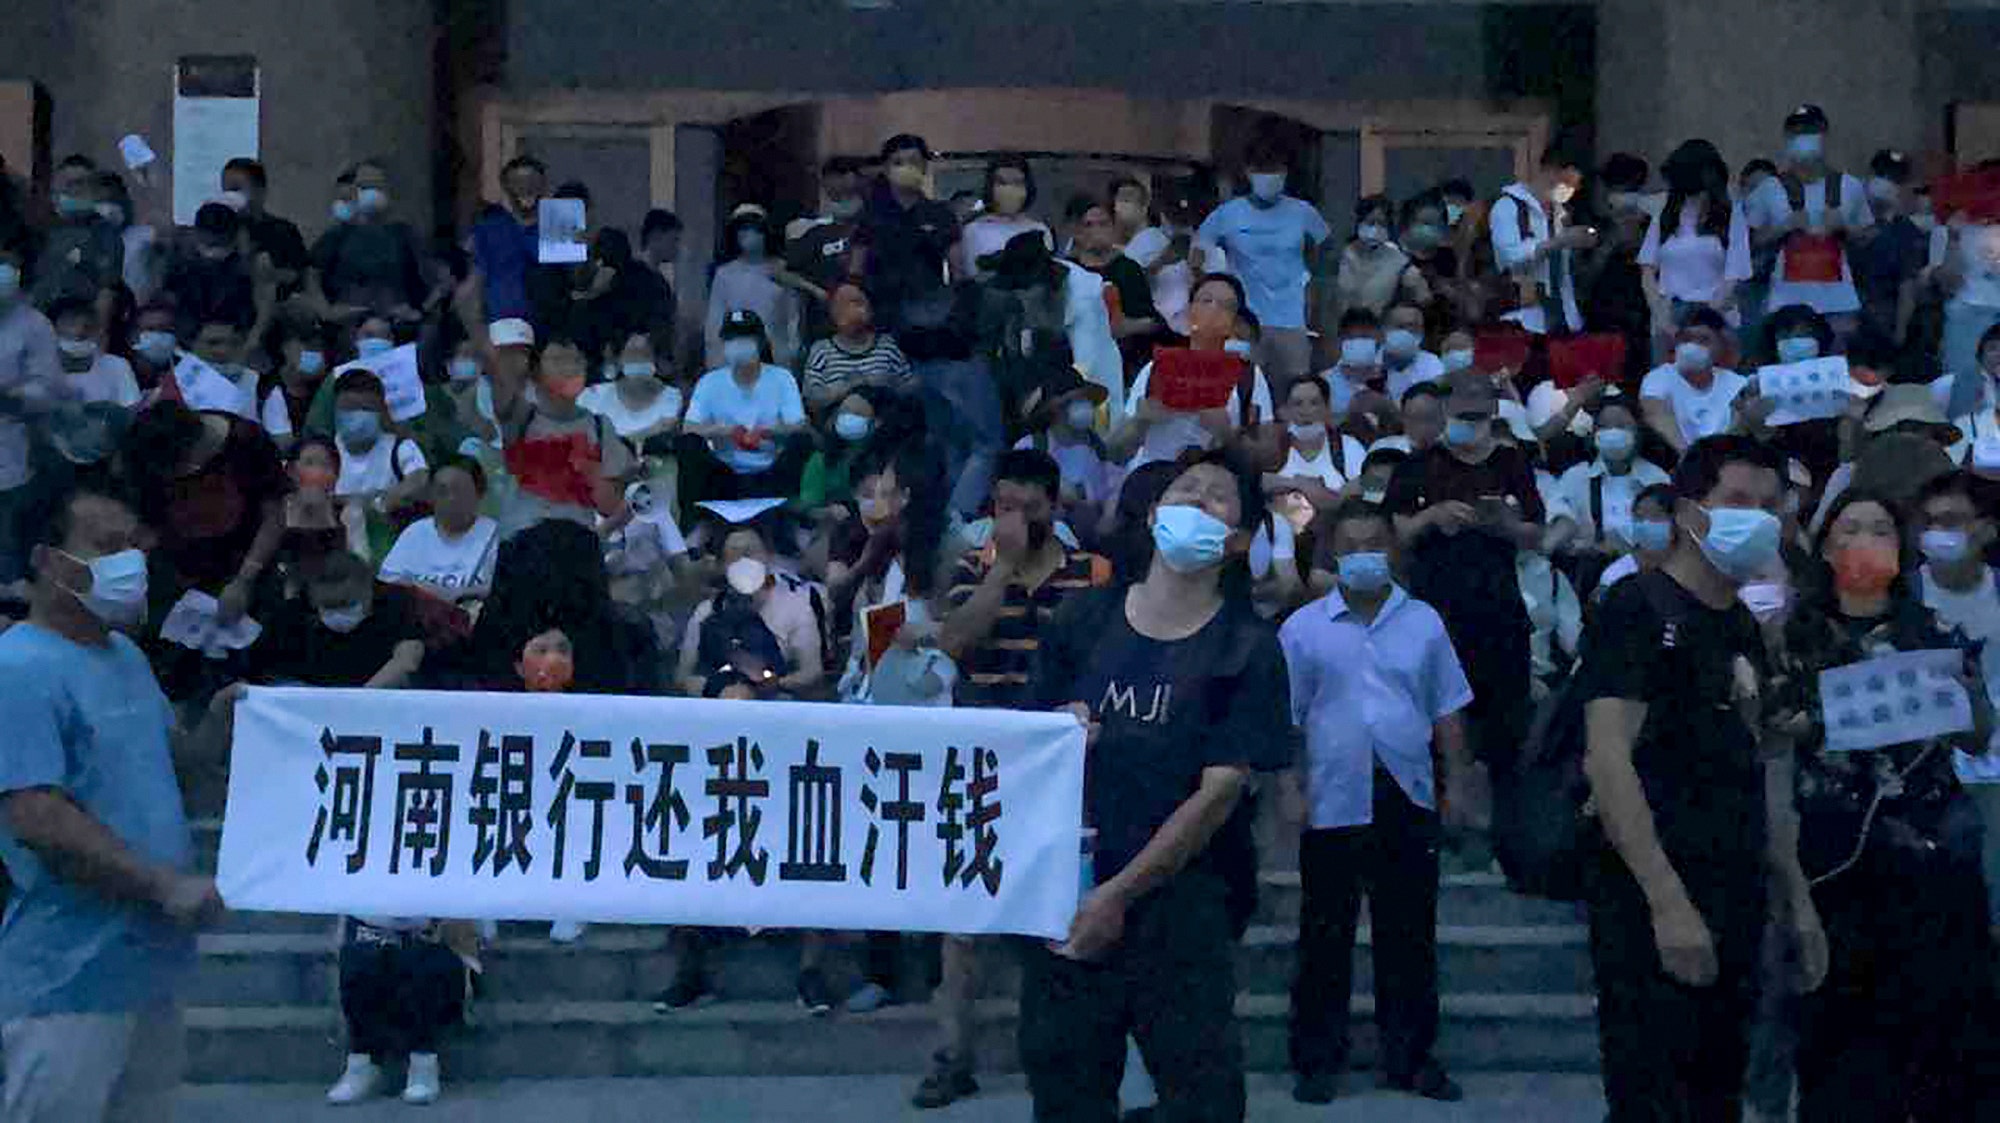 Washington Post editorial board slams China for arresting bank protesters